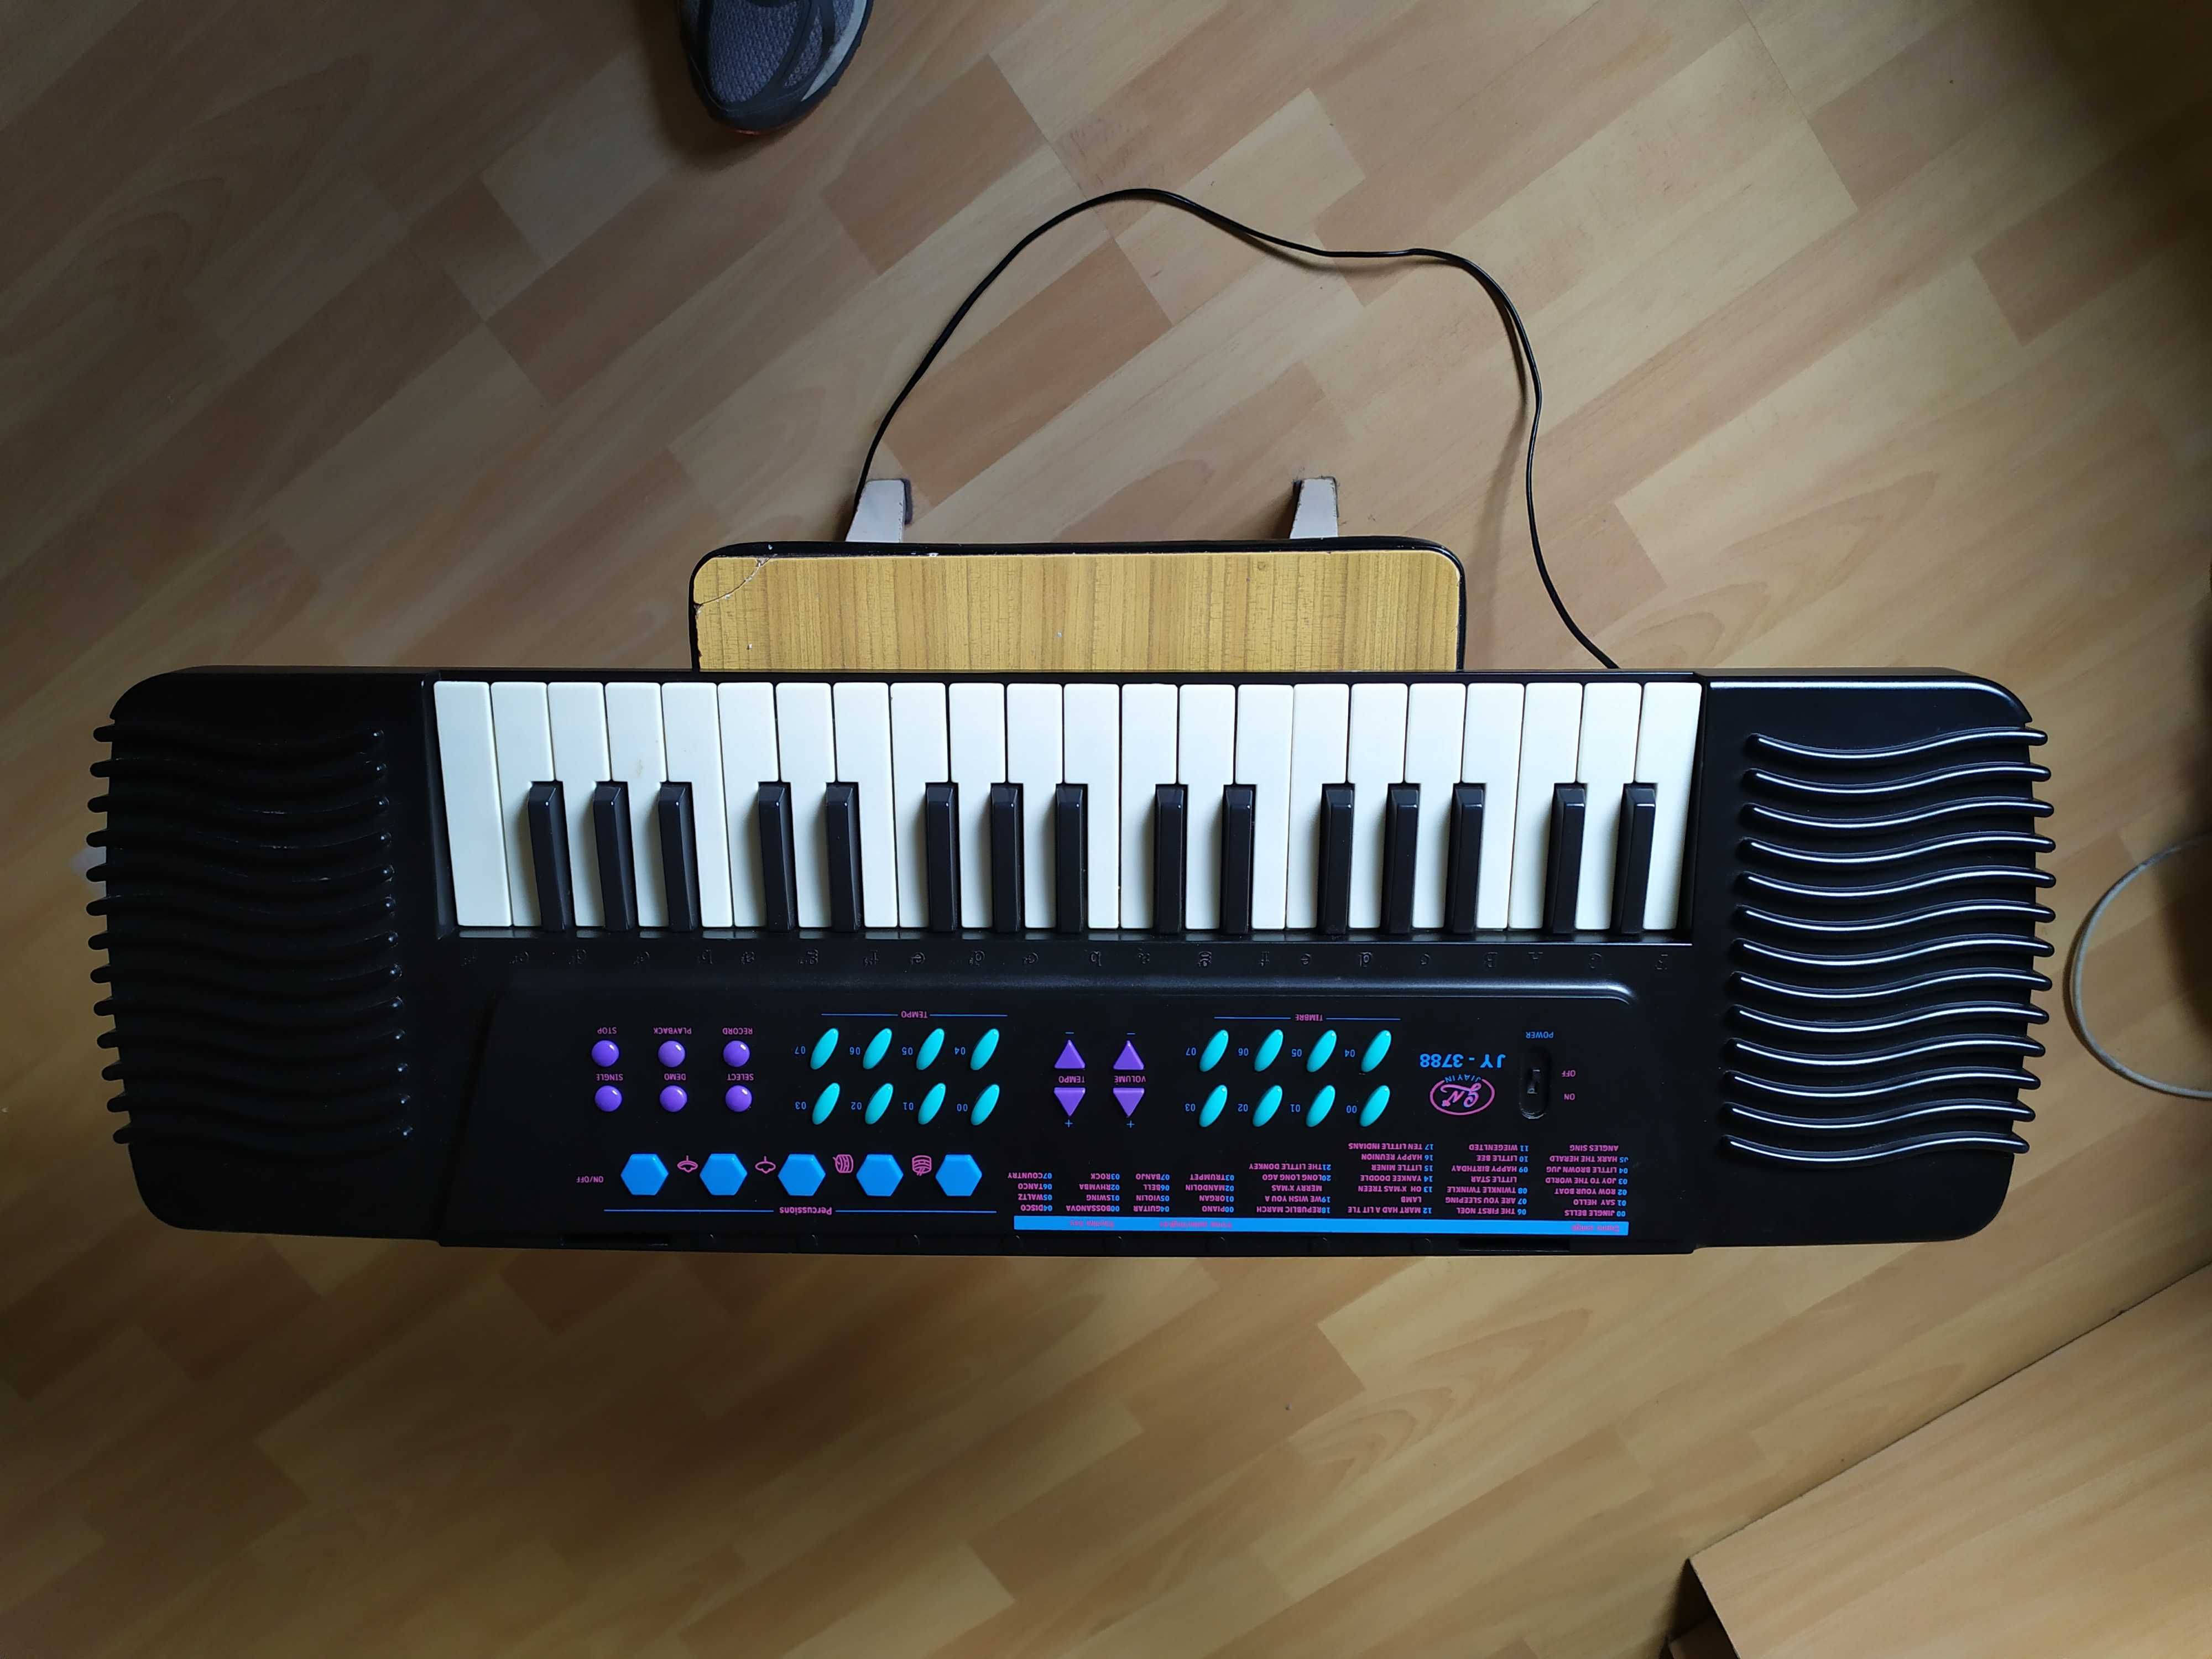 Electronica keyboard JU 3788